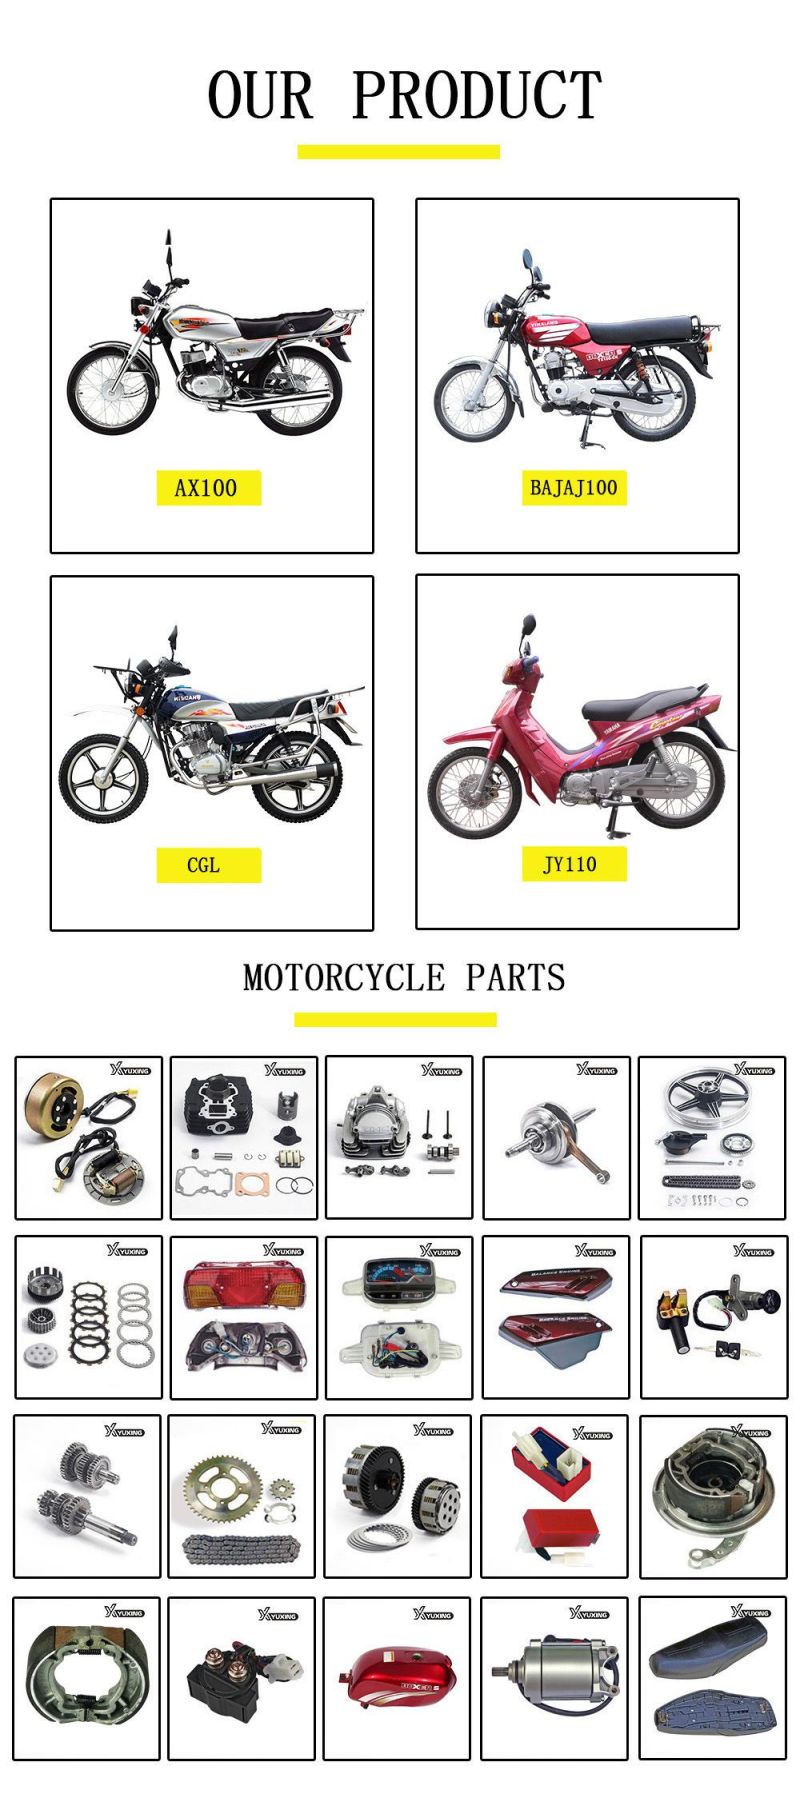 Bajaj Motorcycle Accessories Part Motorcycle Turning Light, Turn Signal